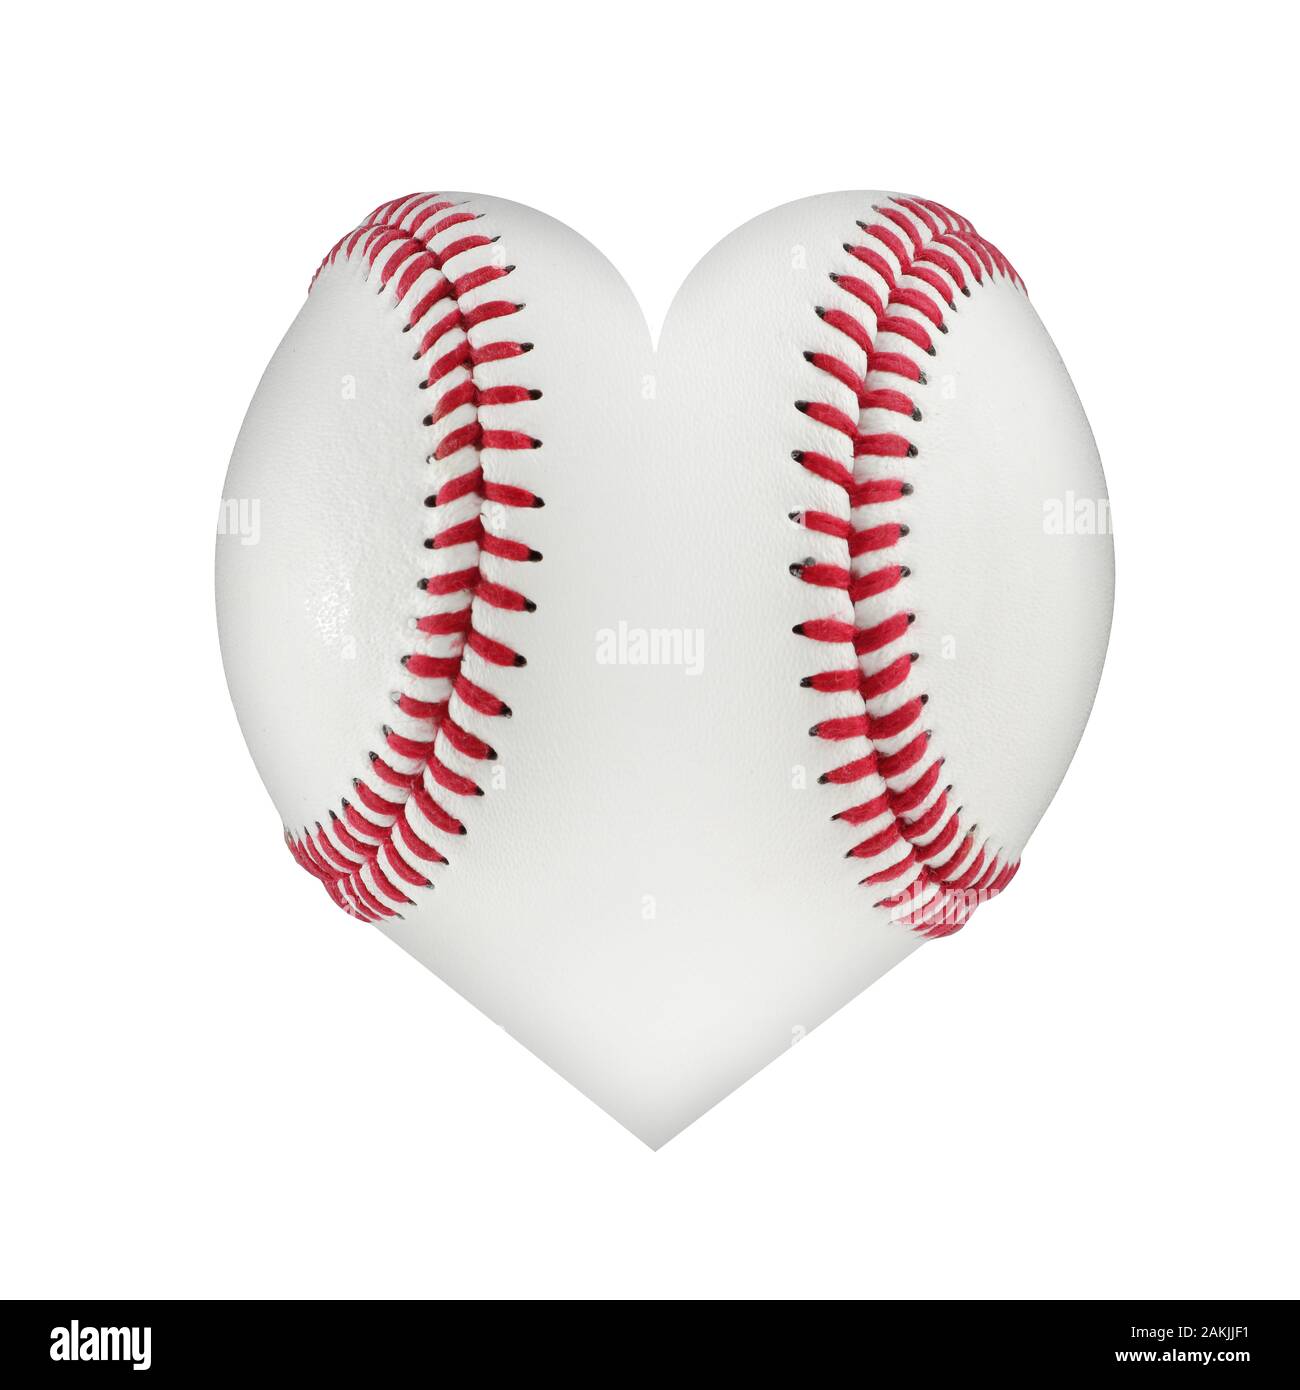 Top 61 Imagenes De Amor Beisbol Romanticas Destinomexico Mx